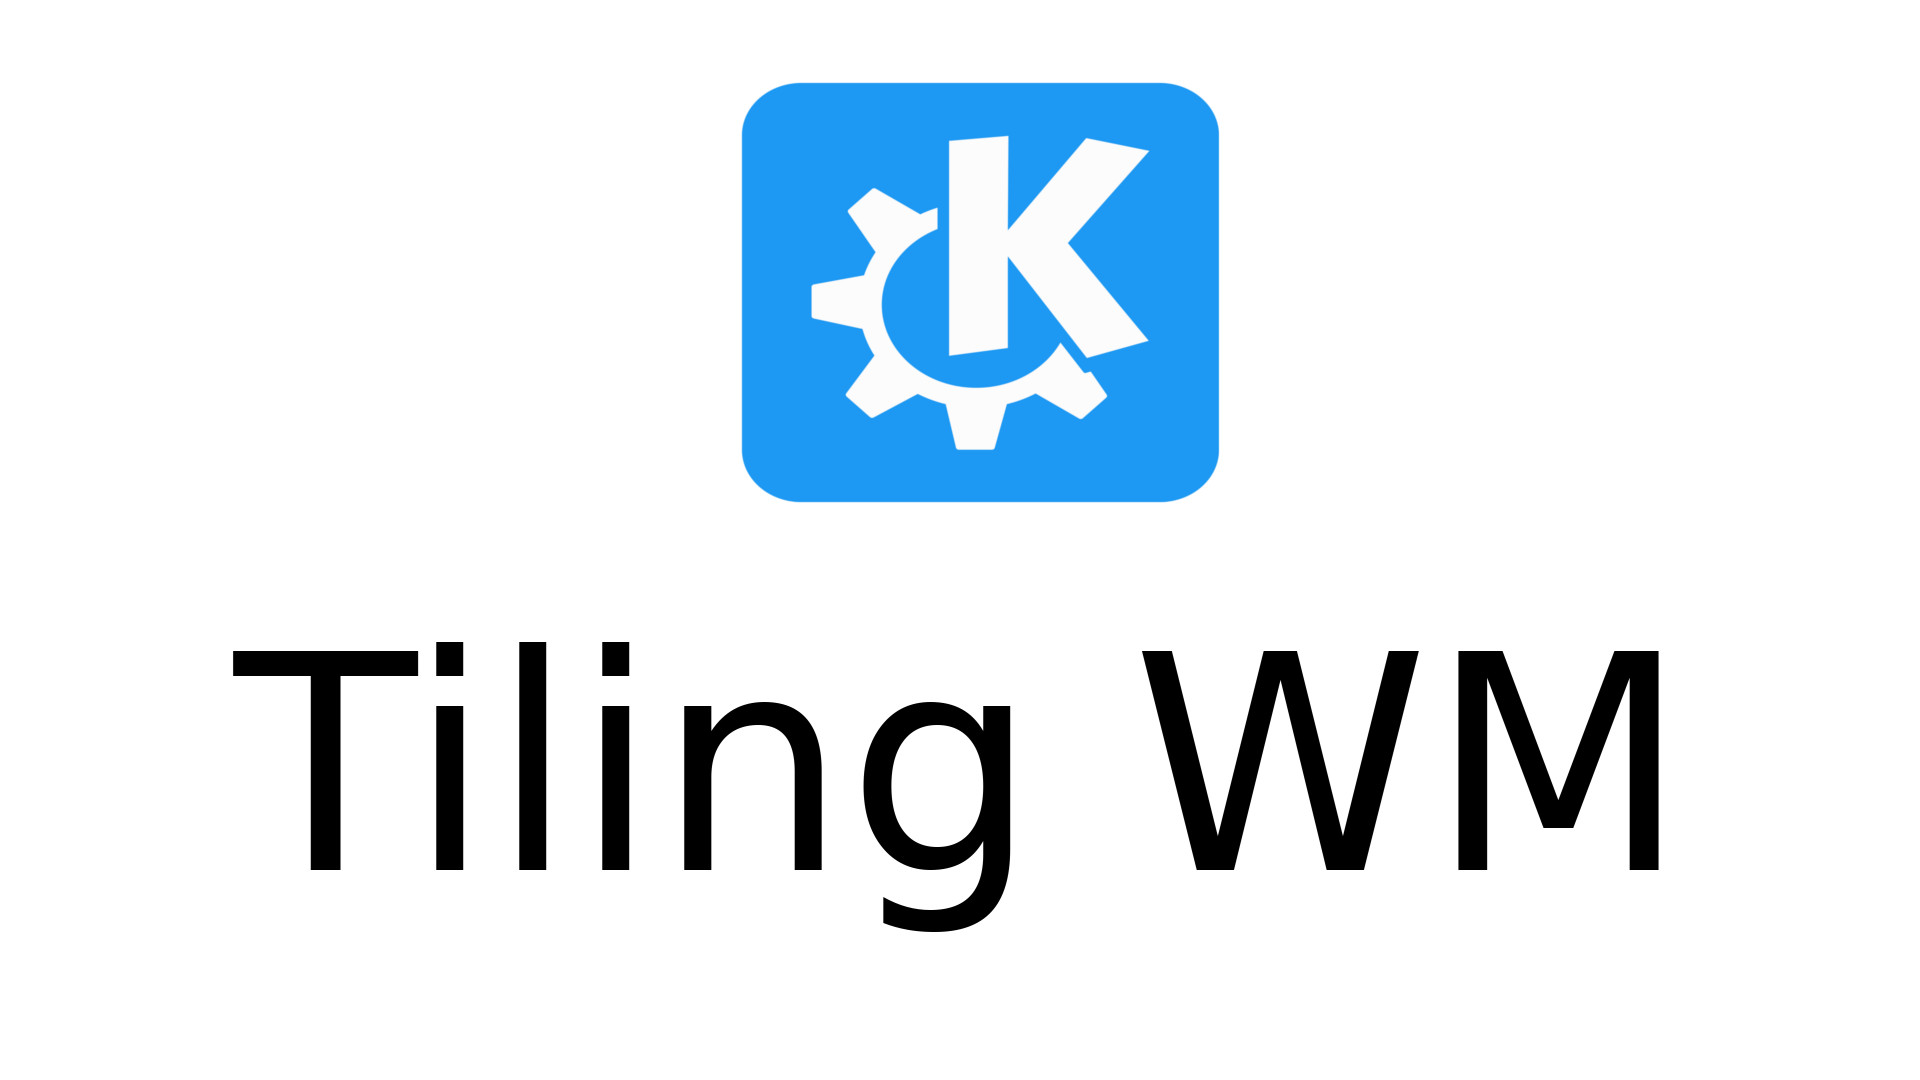 Configure KDE to function like a tiling WM